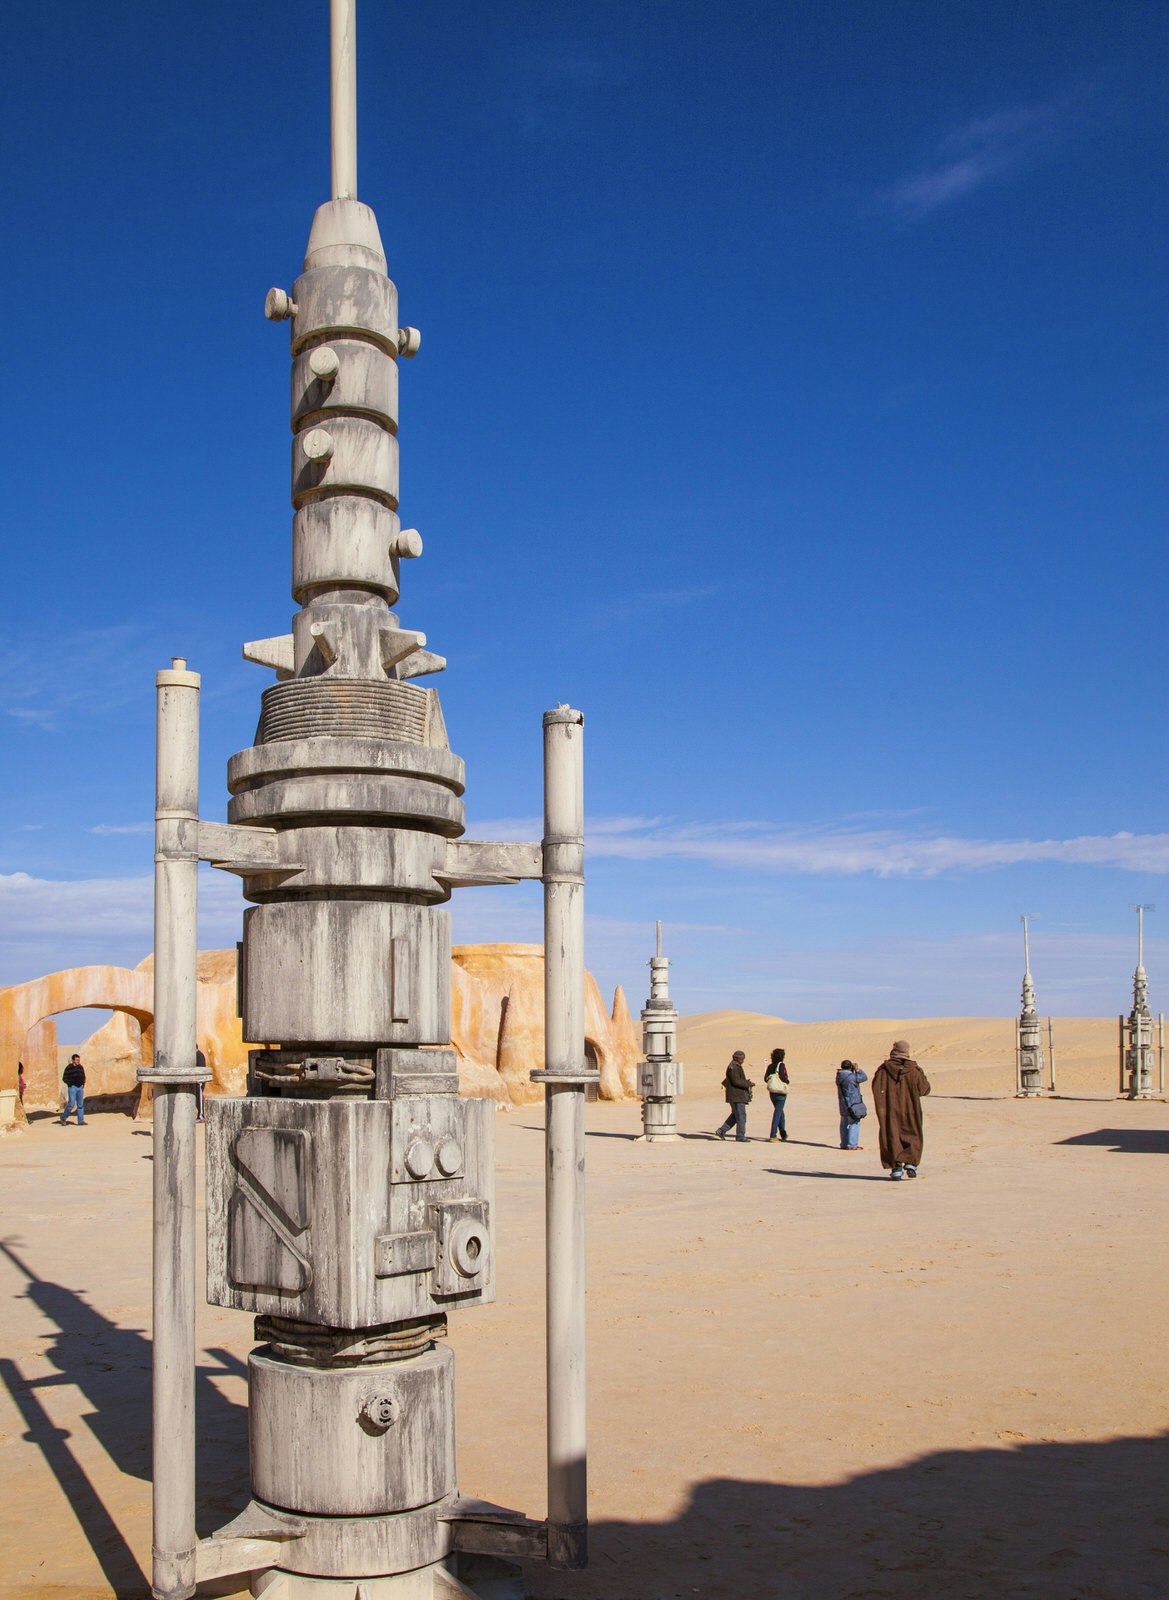 Star Wars film set, southern Tunisia © Juan Carlos Munoz / Getty Images